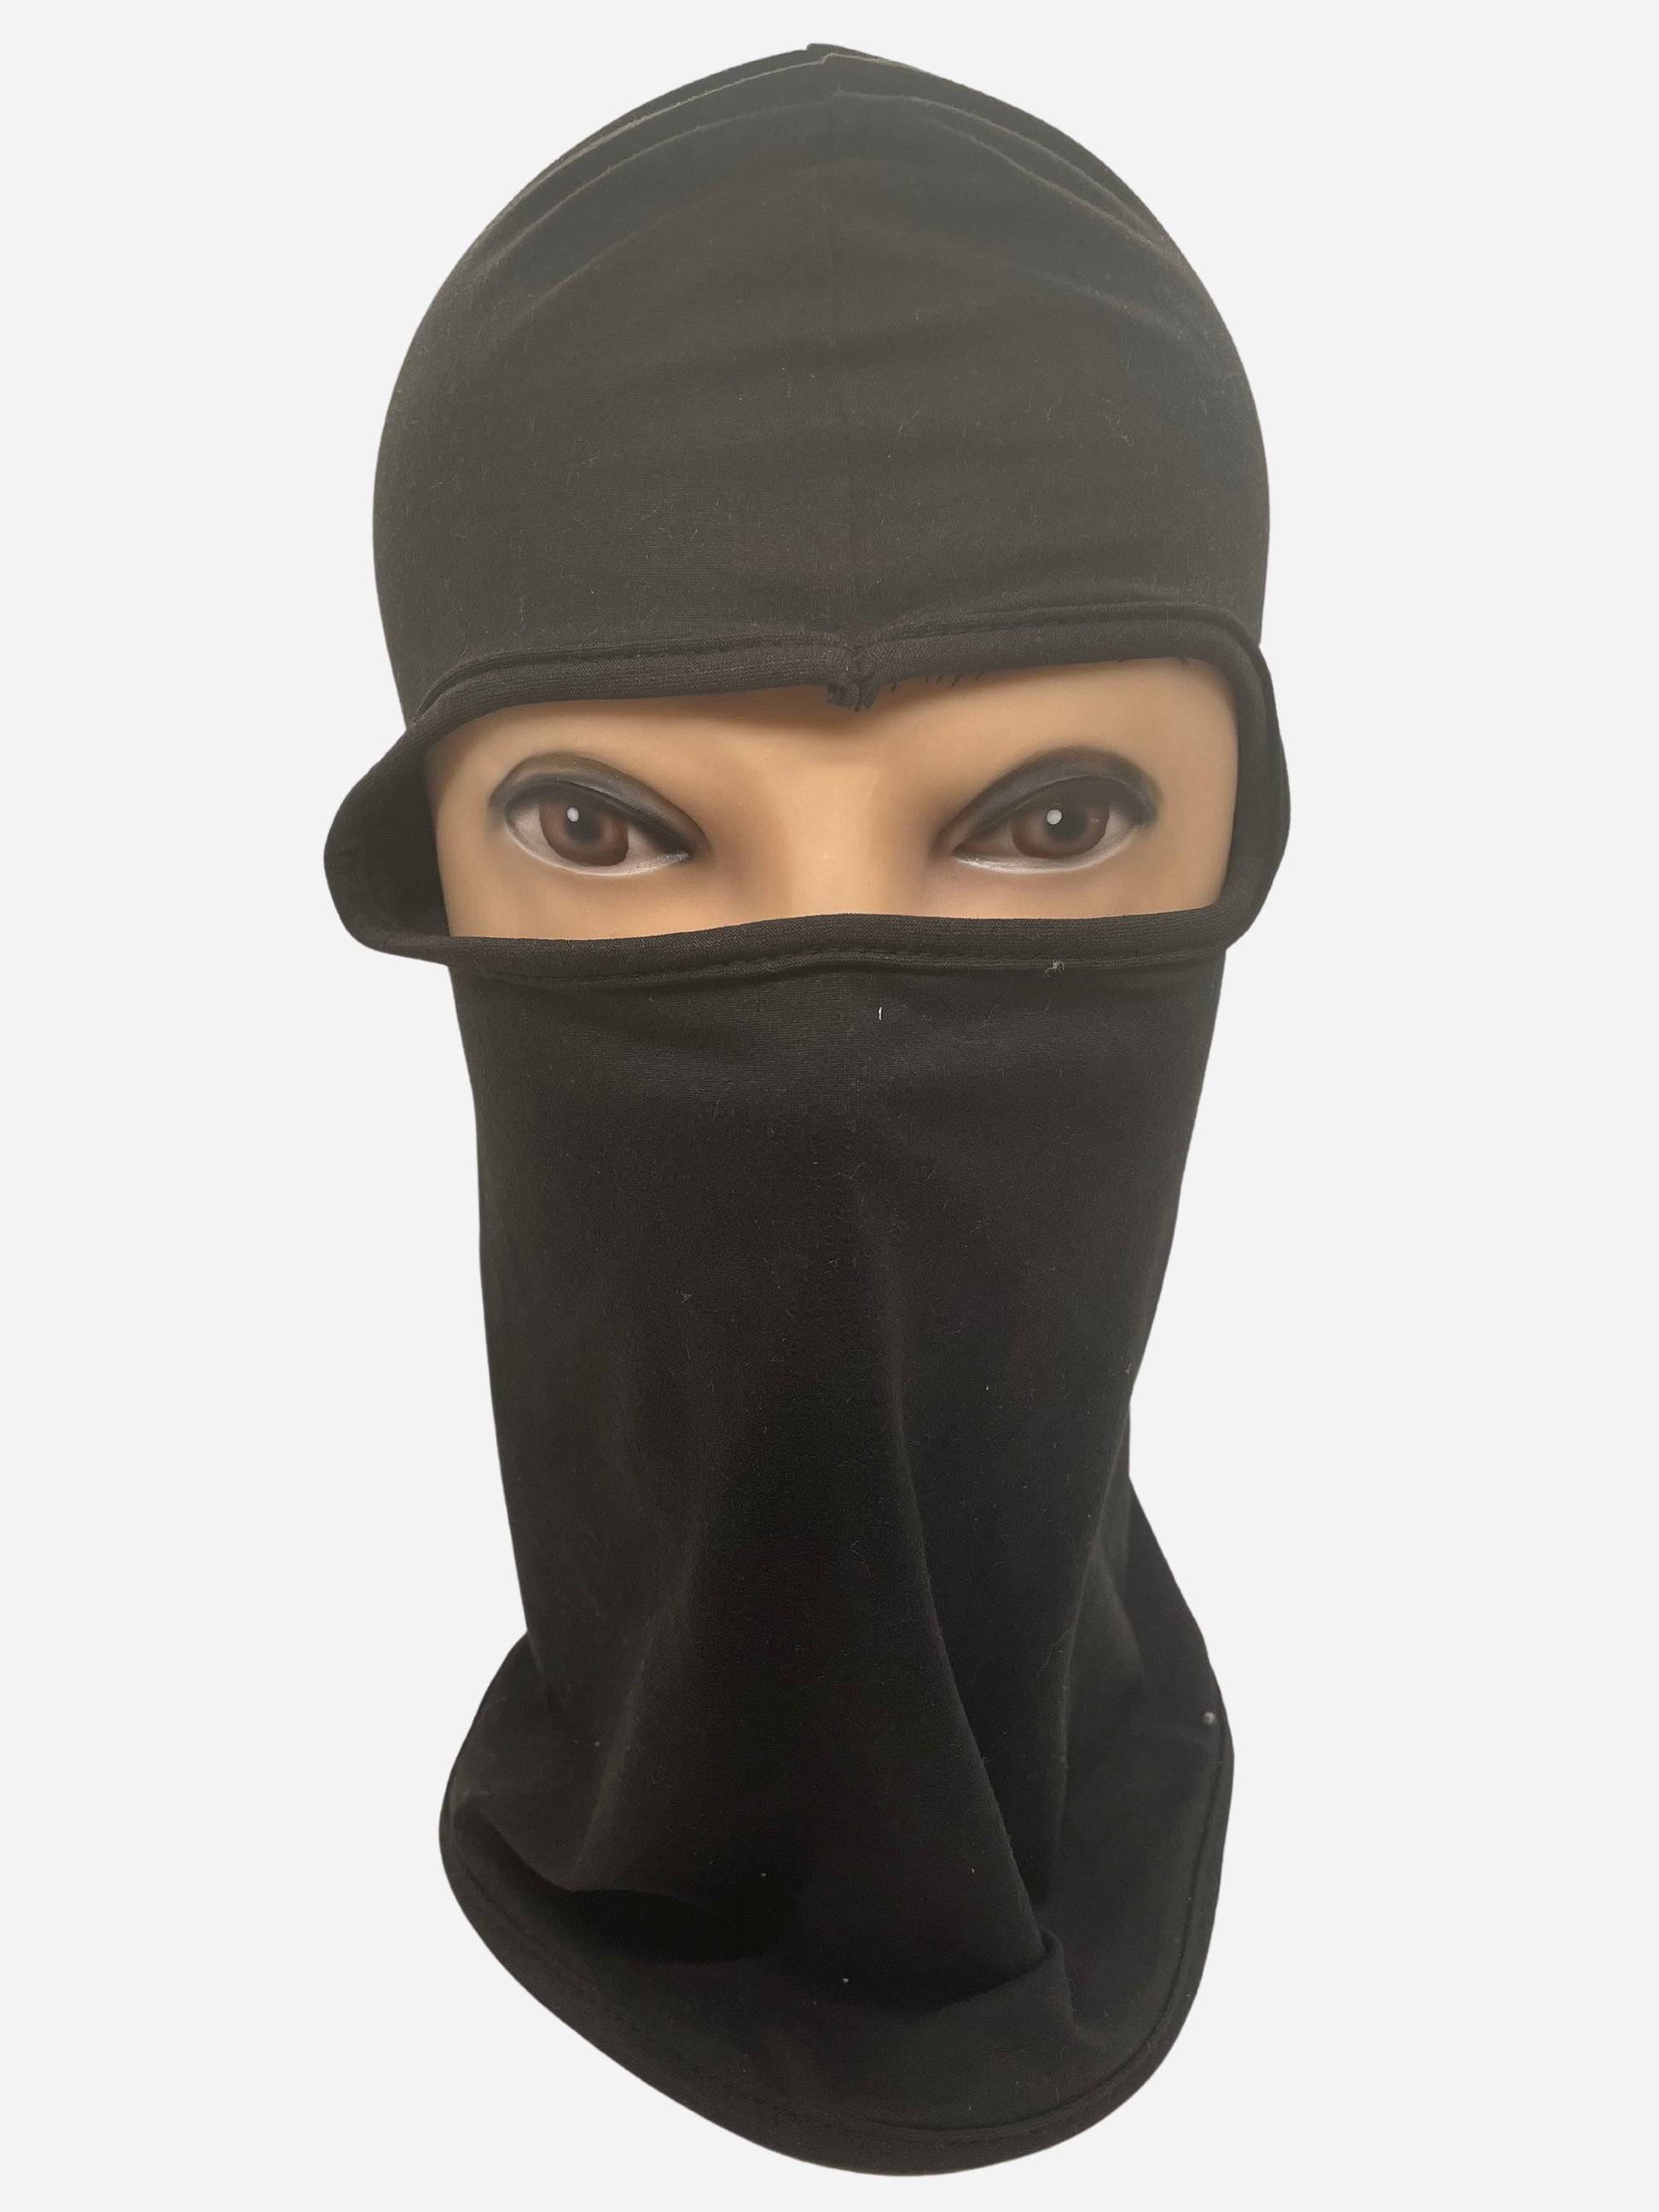 "Black ninja mask with a mesh design and an elastic band"